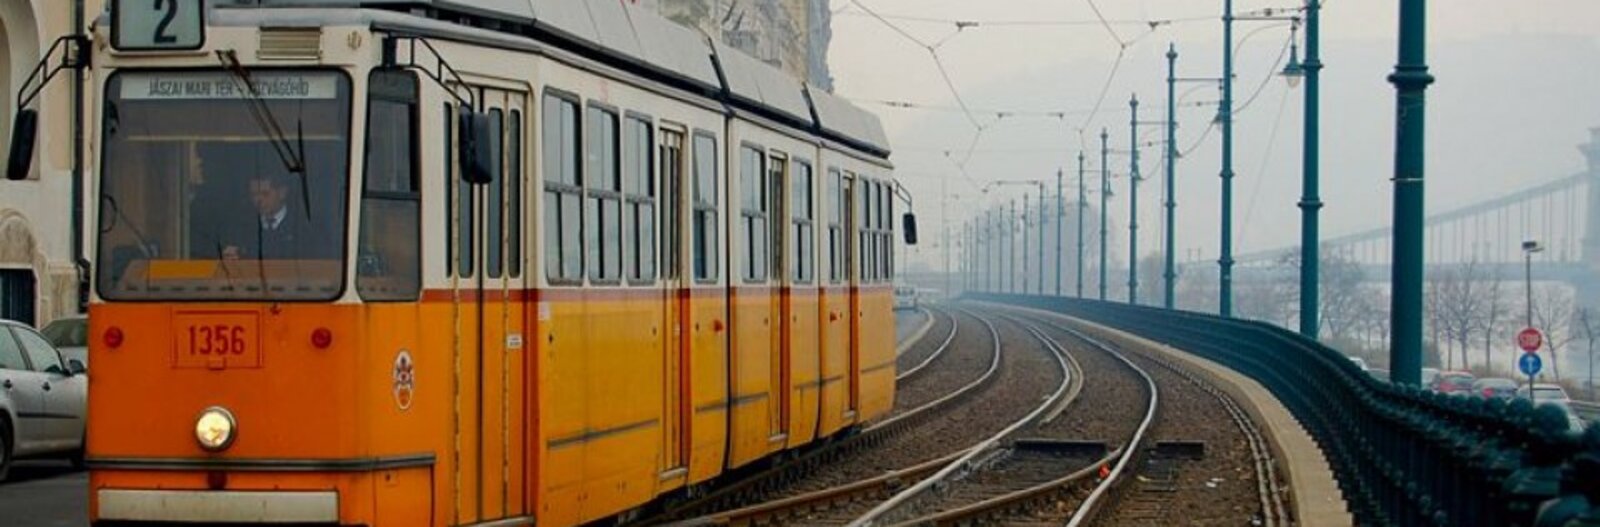 Velük utazunk - Budapesti villamosok